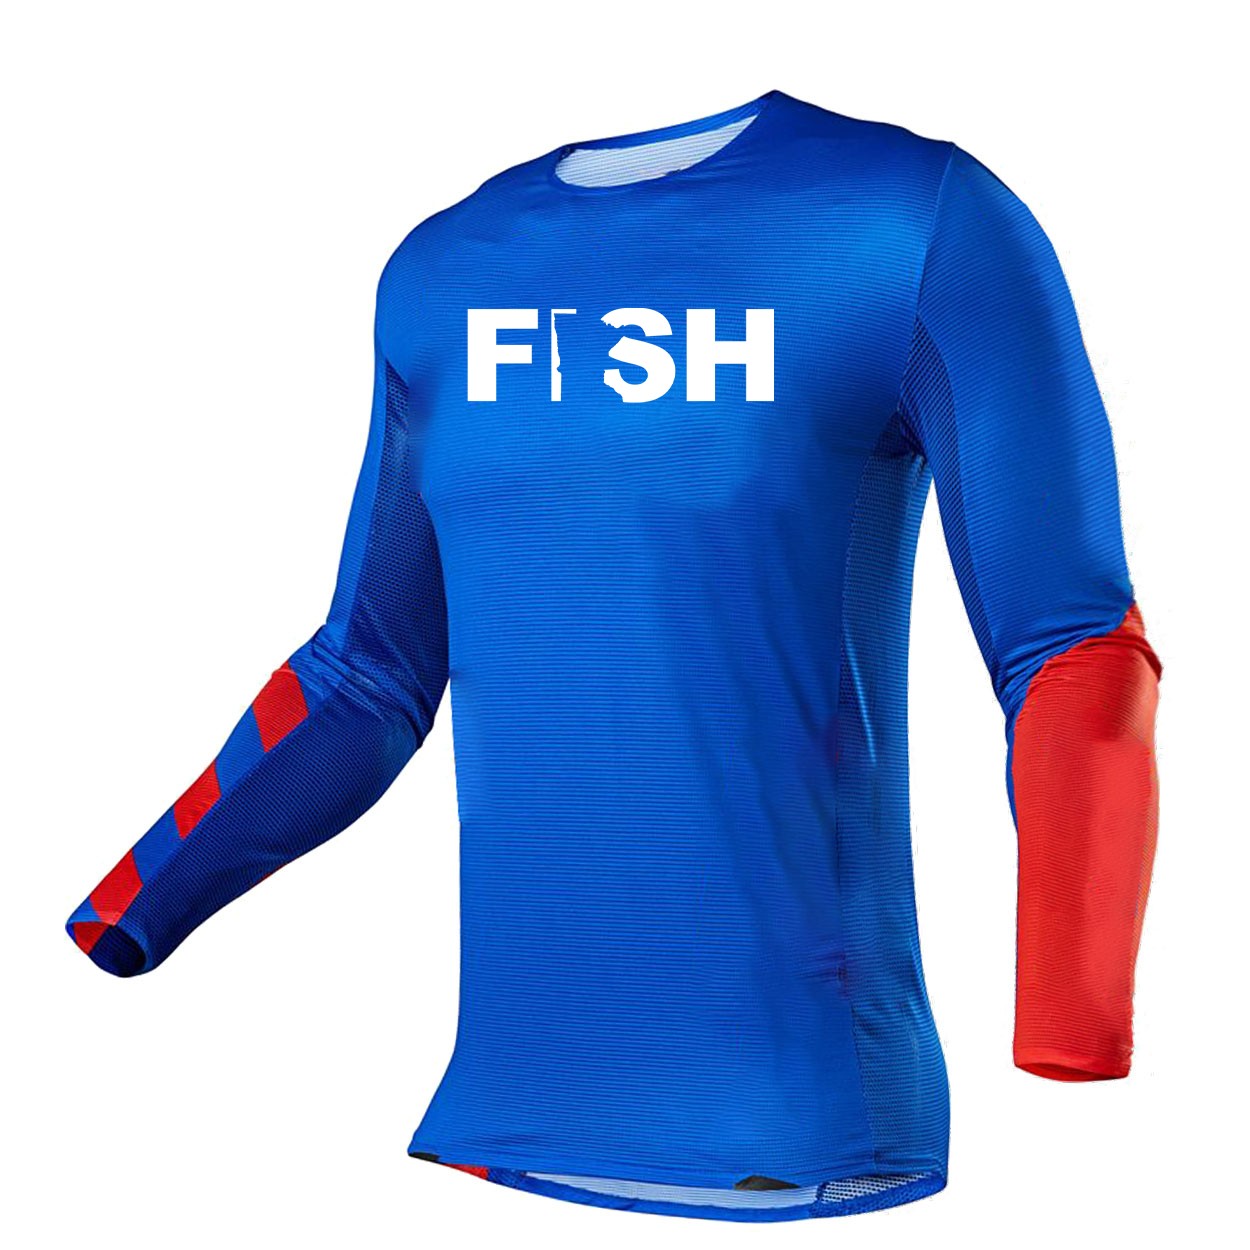 Fish Minnesota Classic Performance Jersey Long Sleeve Shirt Blue/Red